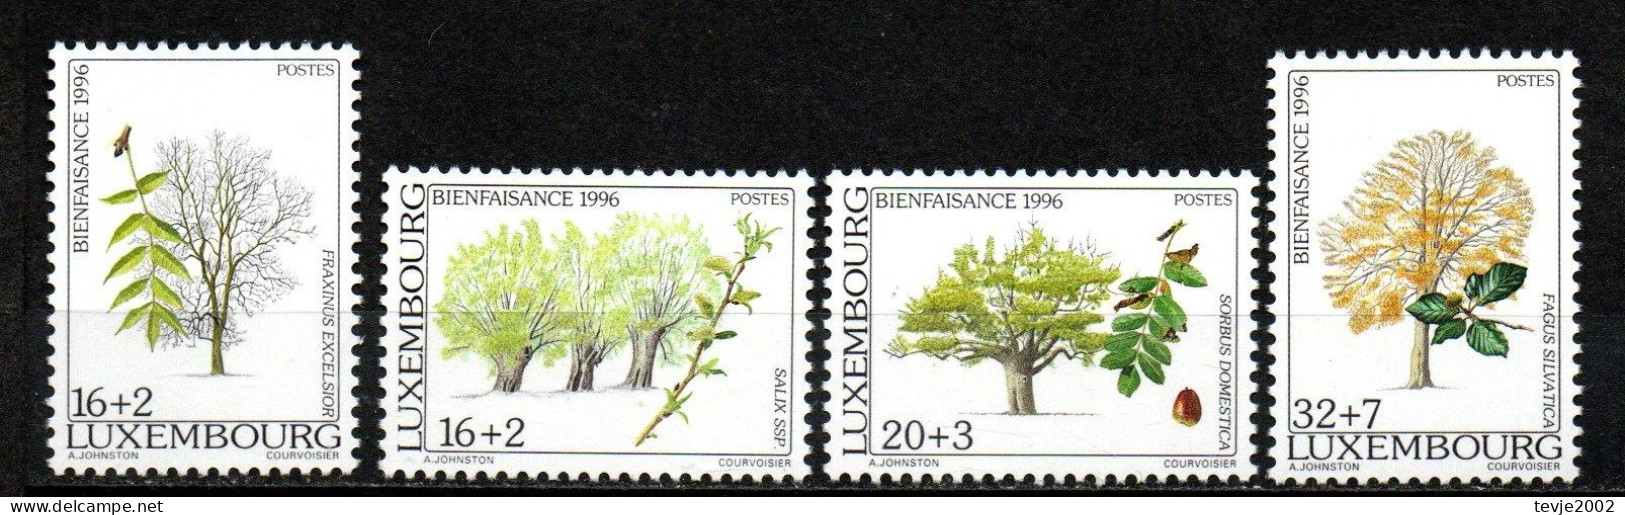 Luxemburg 1996 - Mi.Nr. 1404 - 1407 - Postfrisch MNH - Bäume Trees - Trees